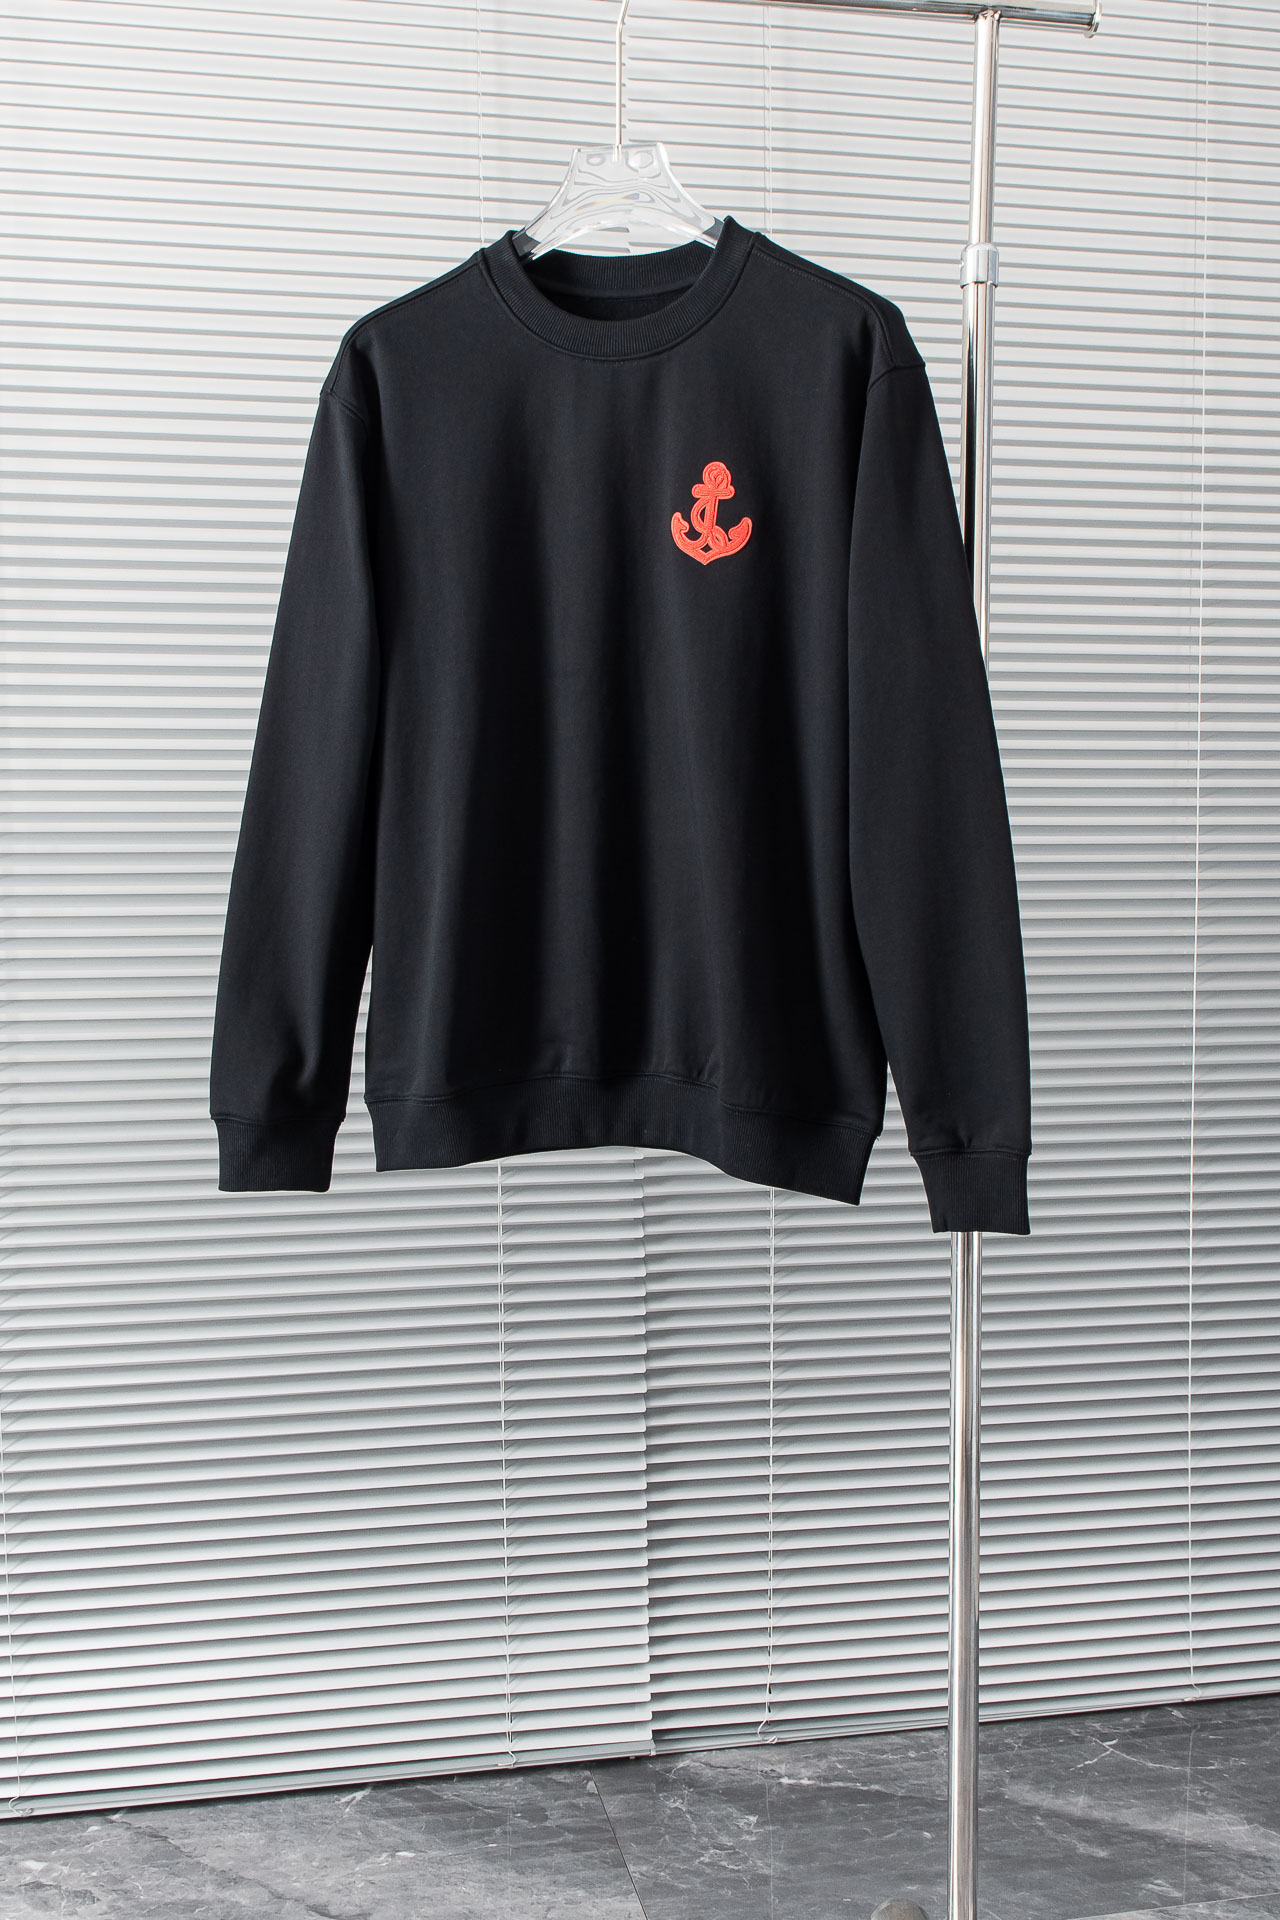 Thom Browne Kleding Sweatshirts Online winkel
 Mannen Katoen Herfst/winter collectie Fashion Lange mouw